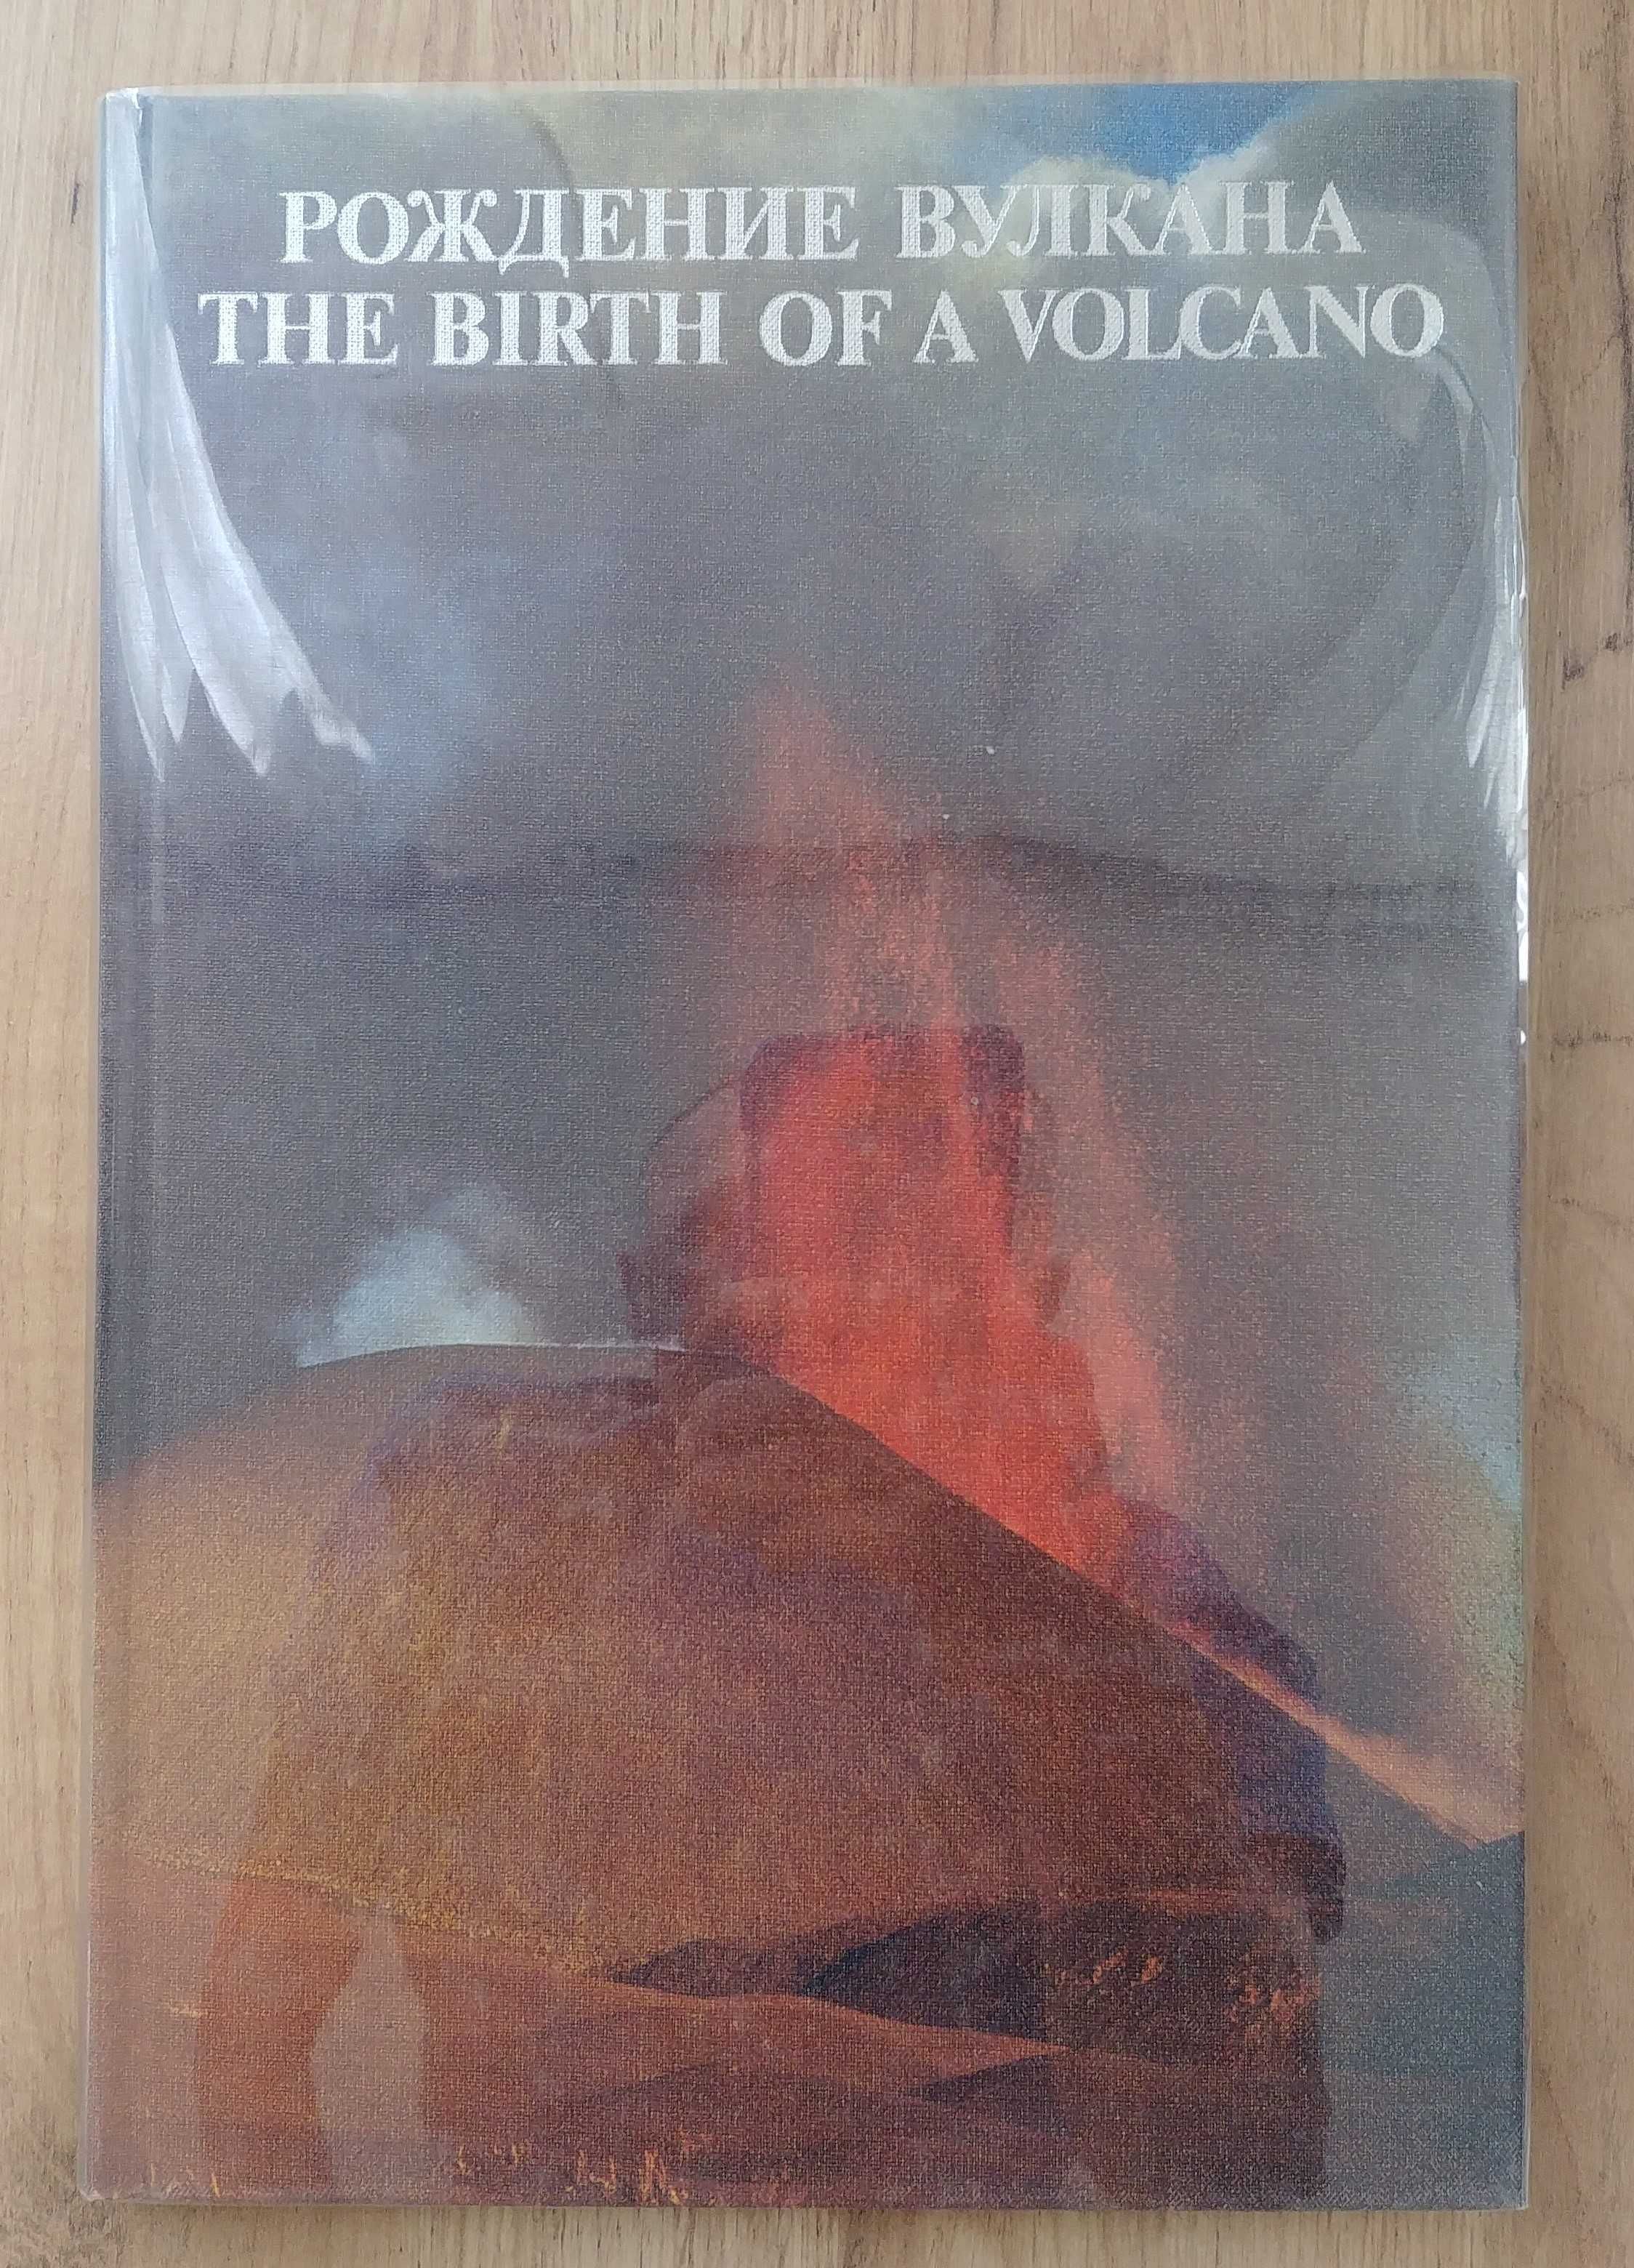 Narodziny wulkanu - the birth of a volcano